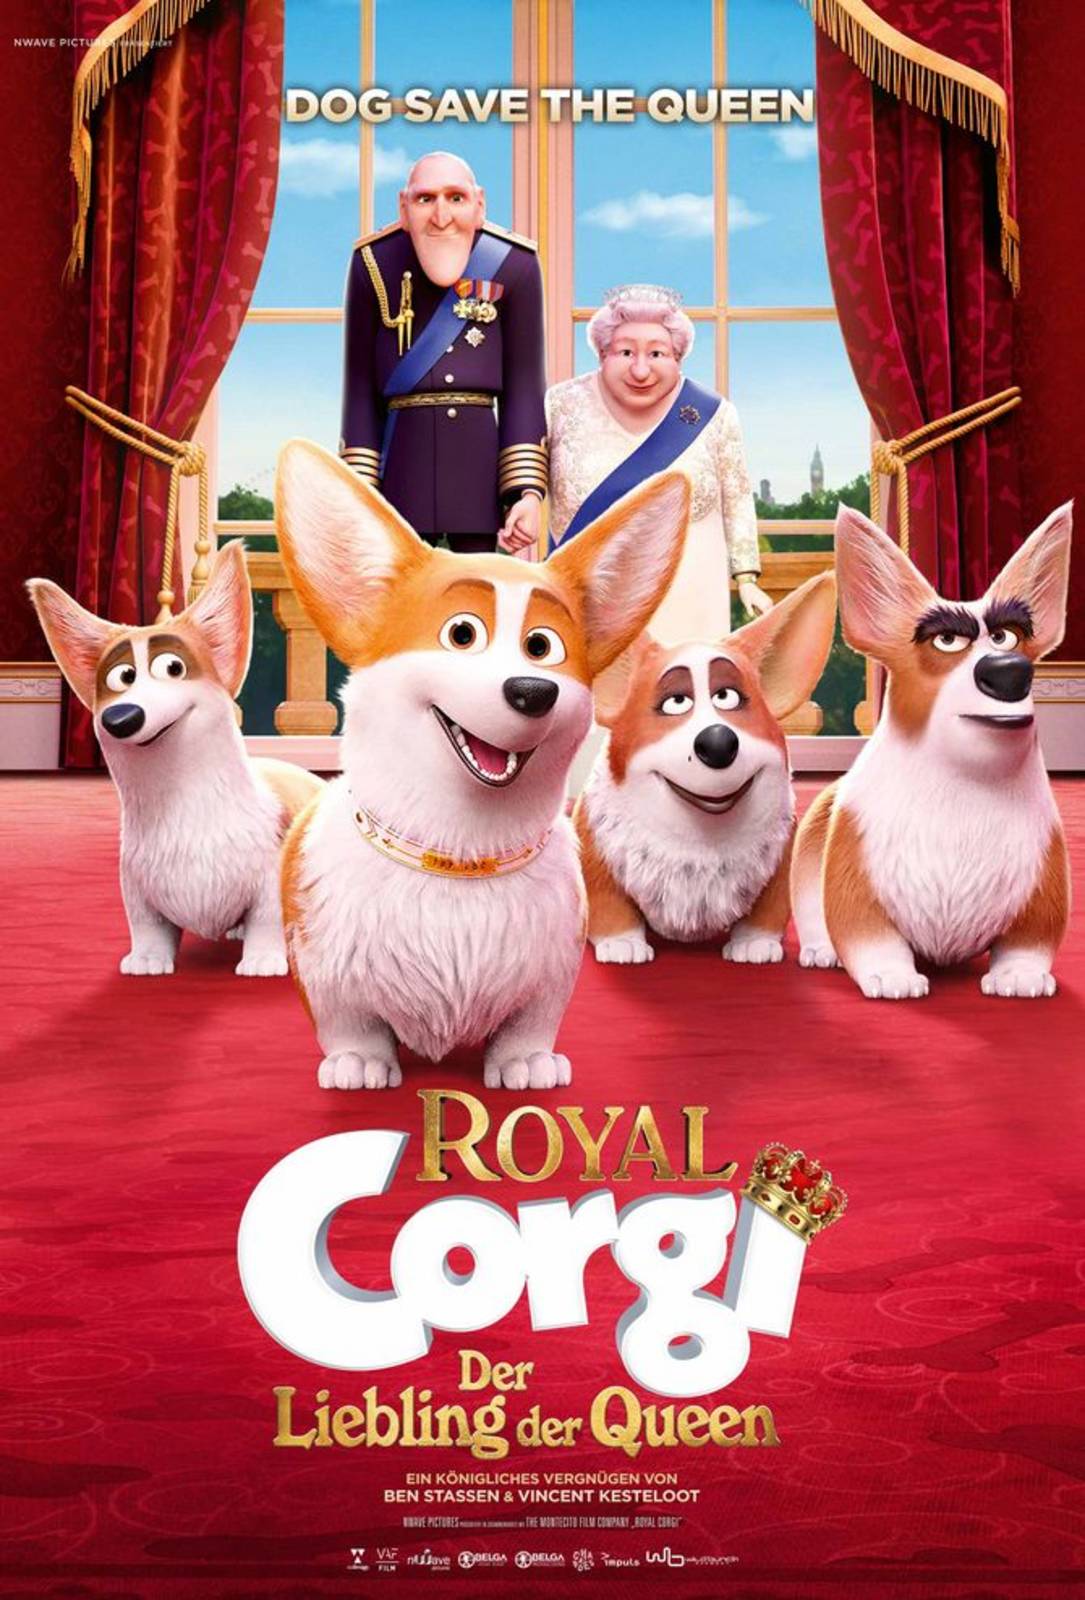  The Queens Corgi سگ مورد علاقه ملکه